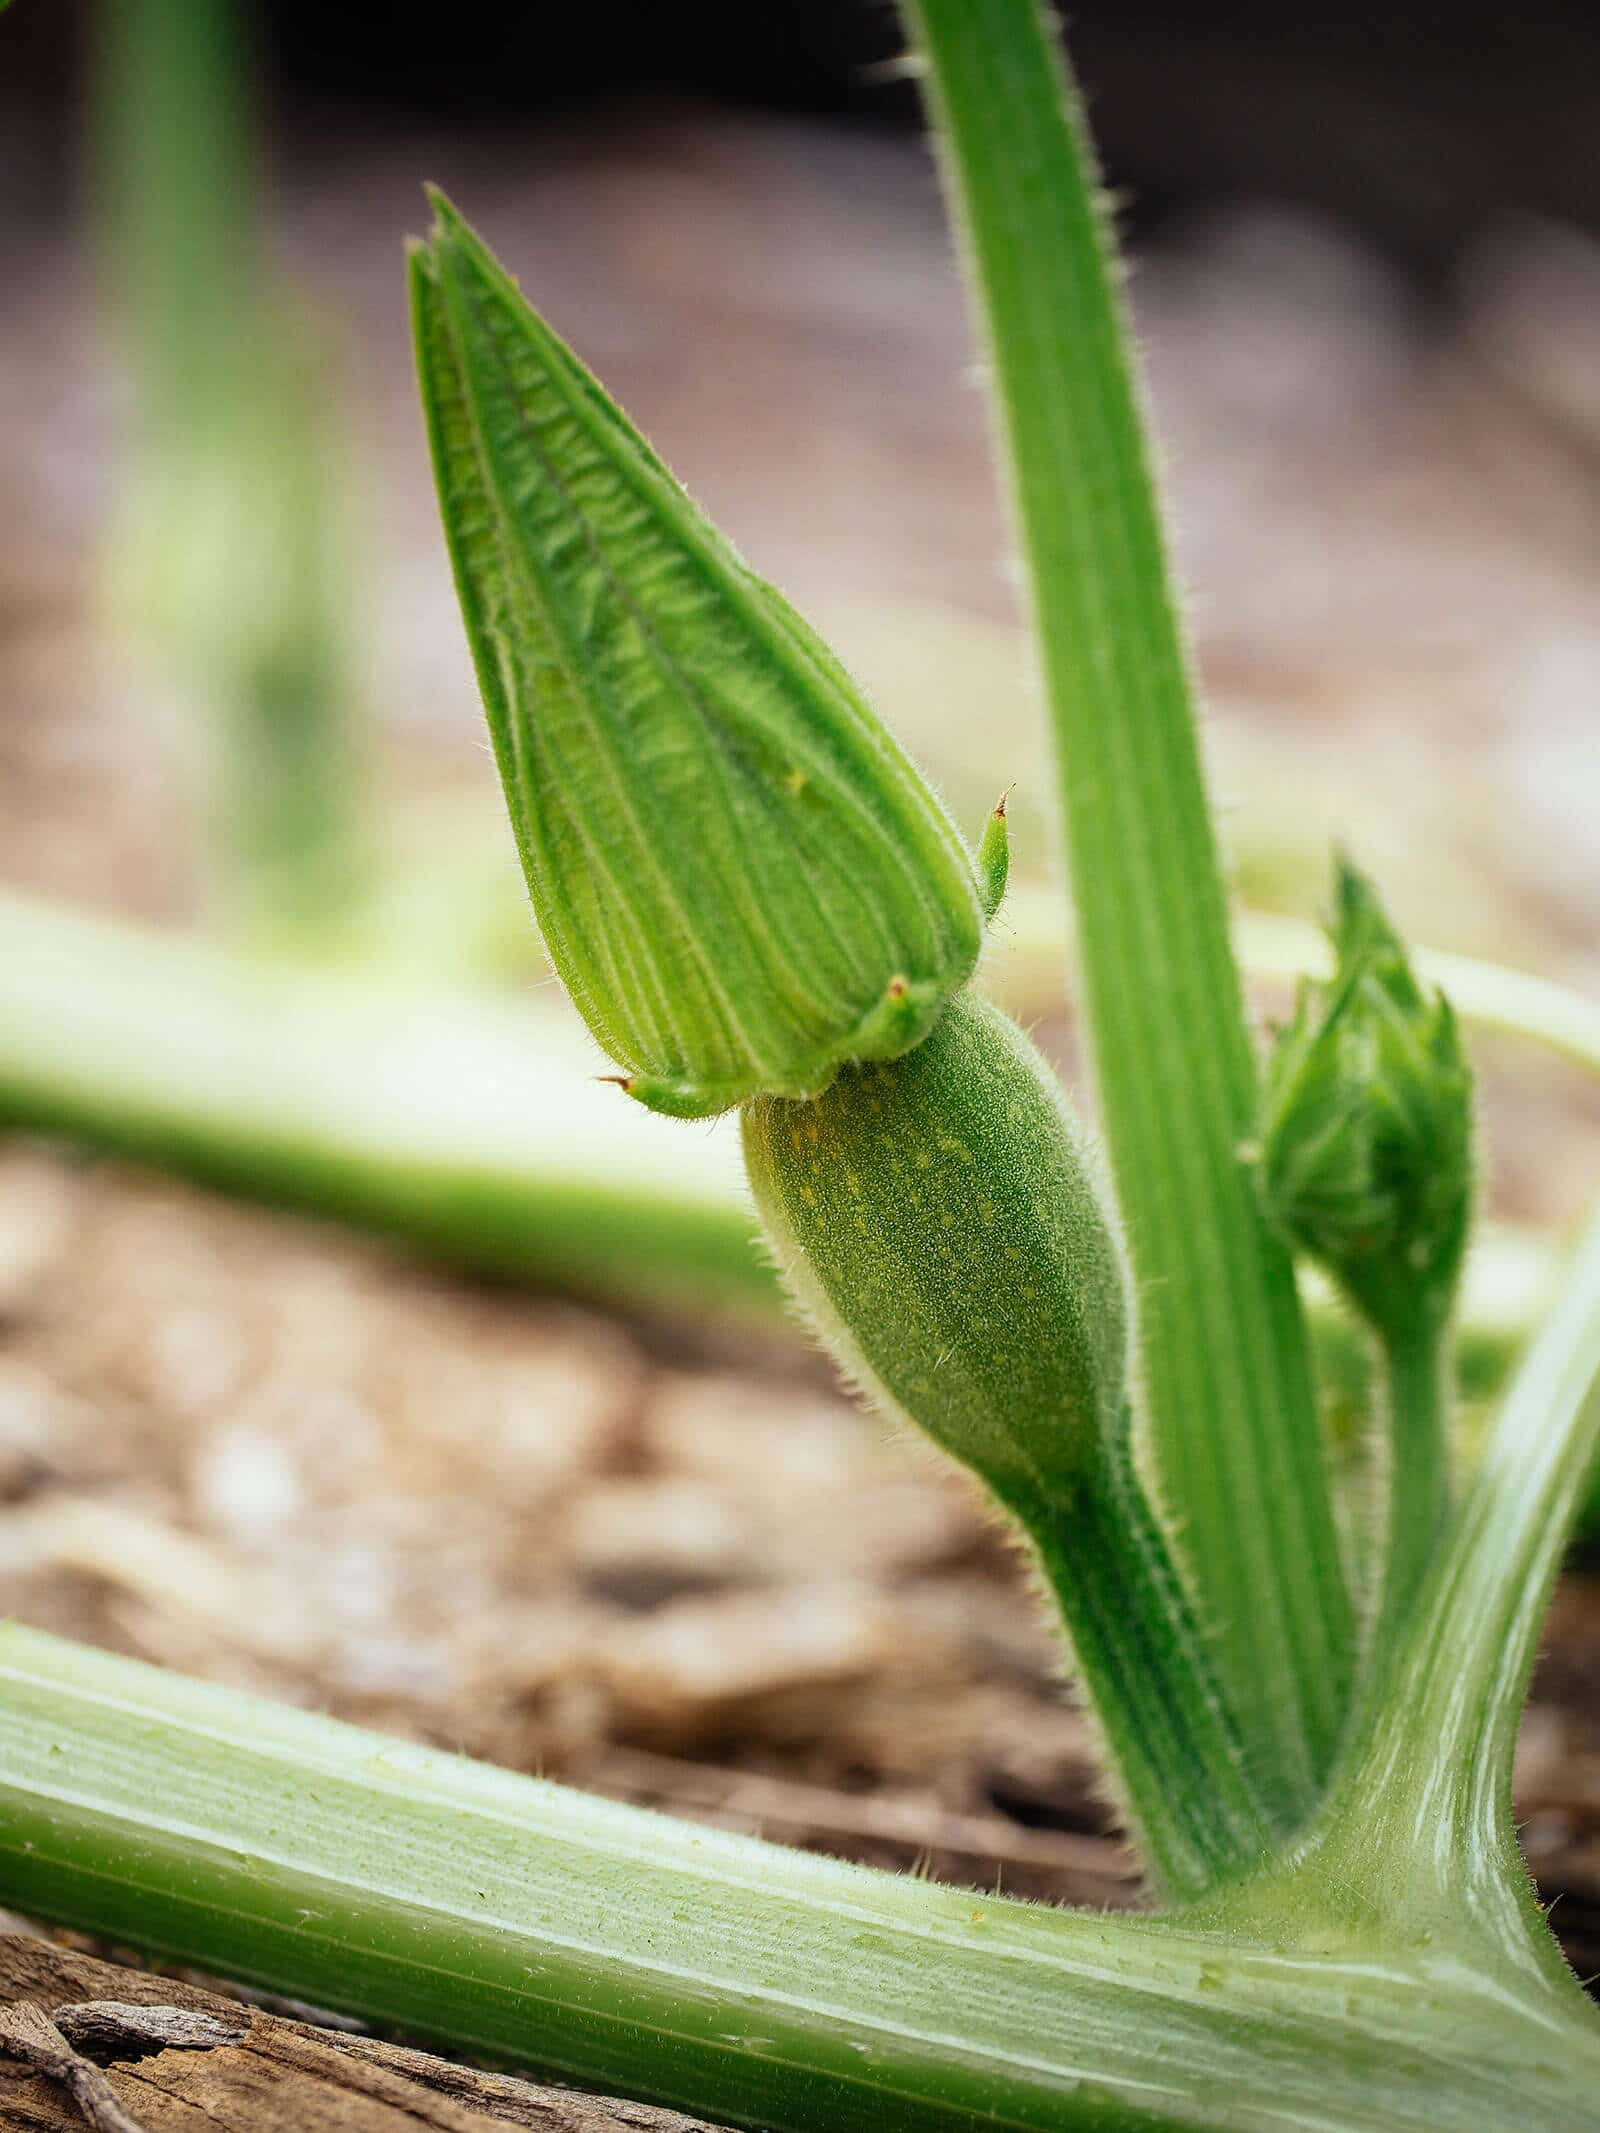 Female zucchini flower with ovary (immature squash)